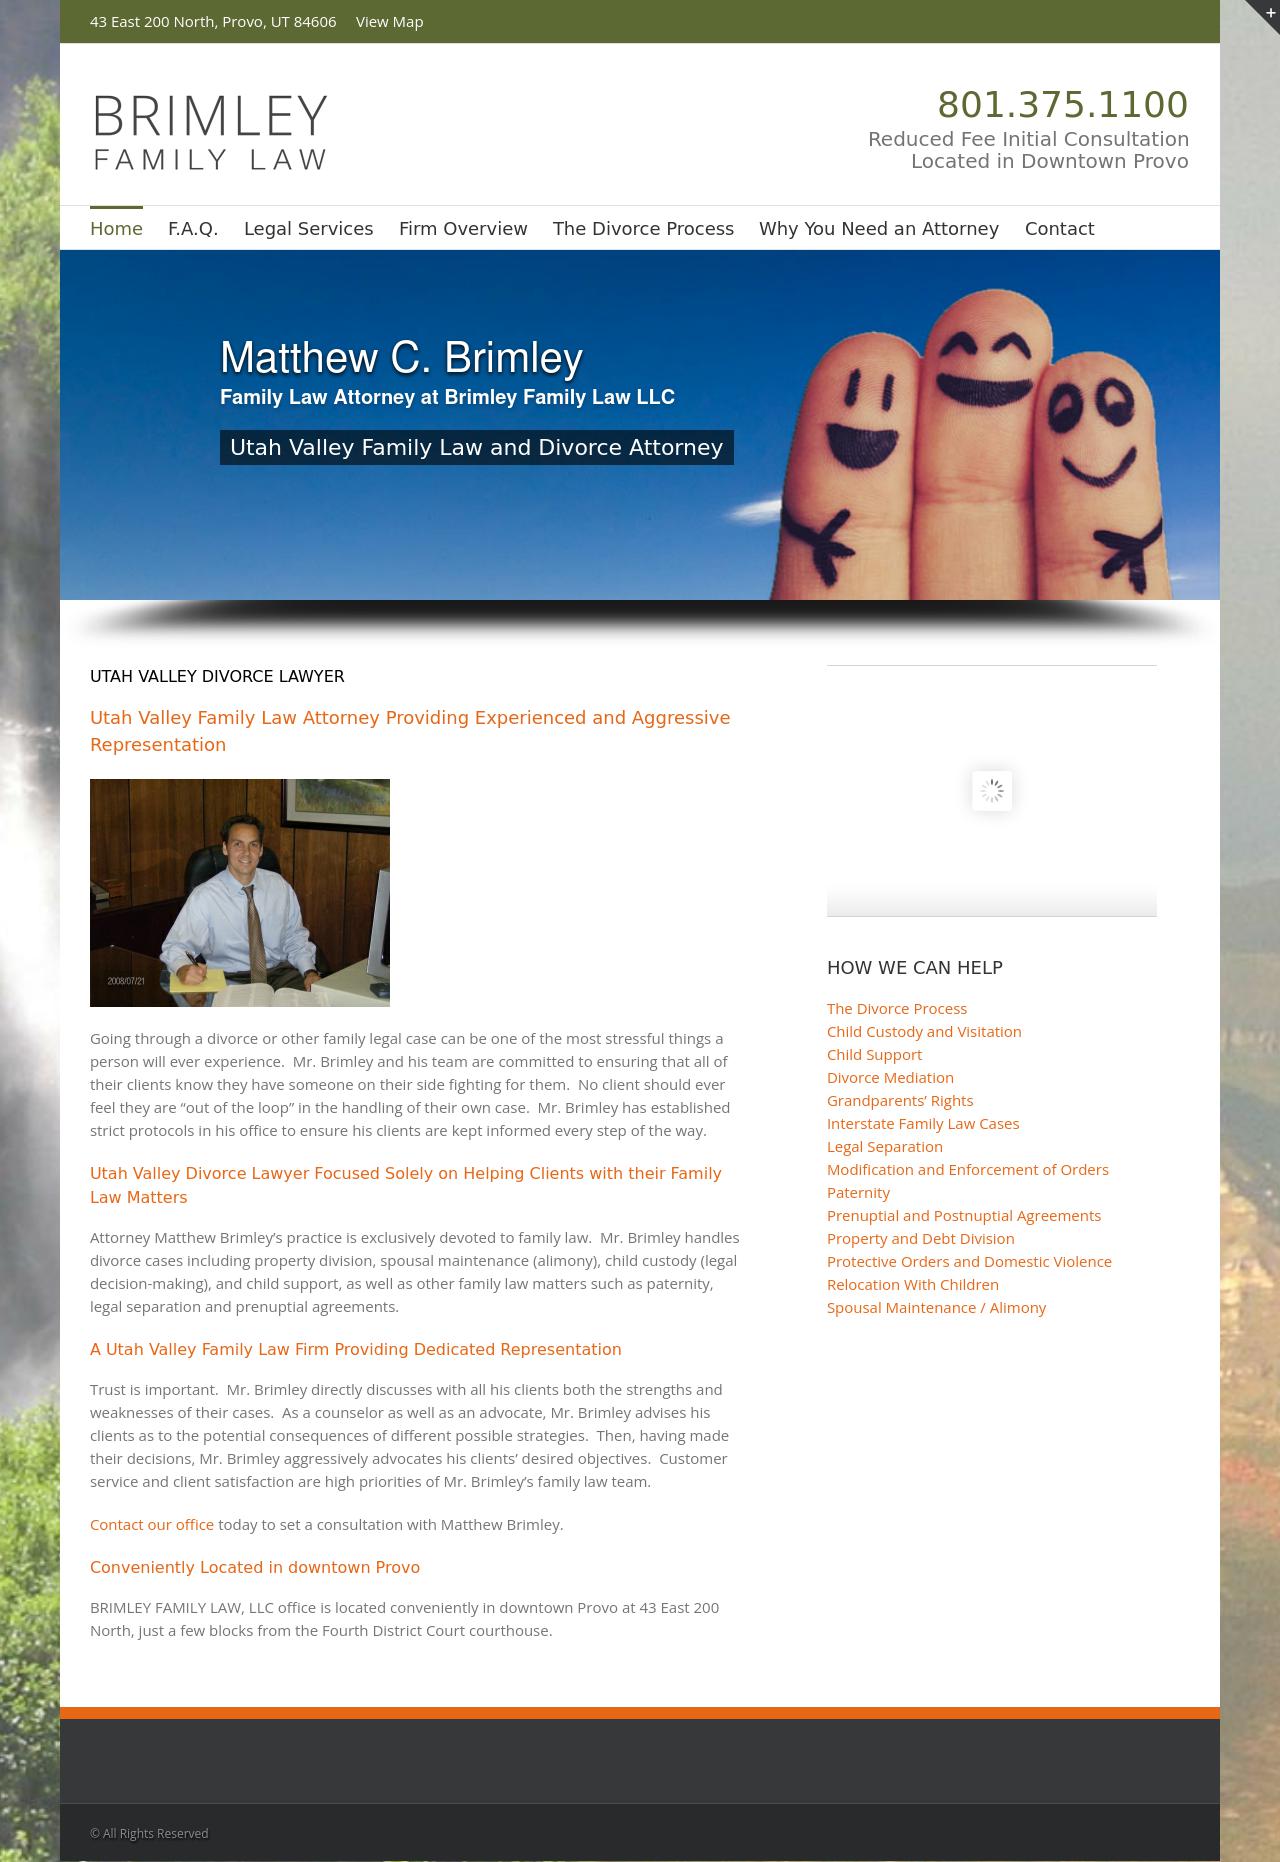 Brimley Family Law - Provo UT Lawyers